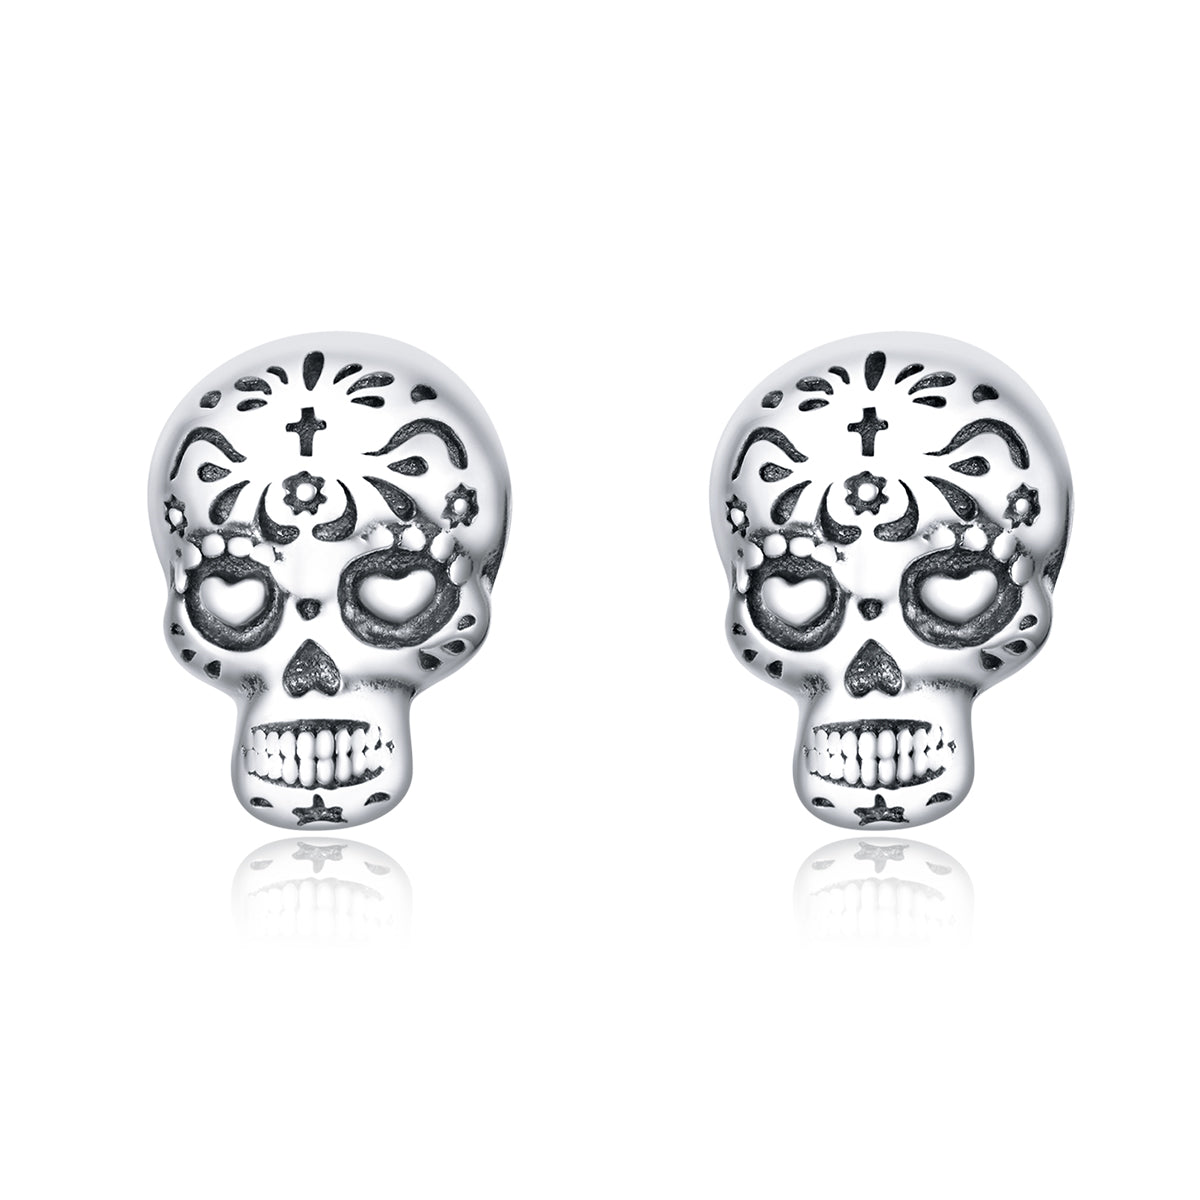 Skull Earrings - Sterling Silver 925 - High Quality - NEW622